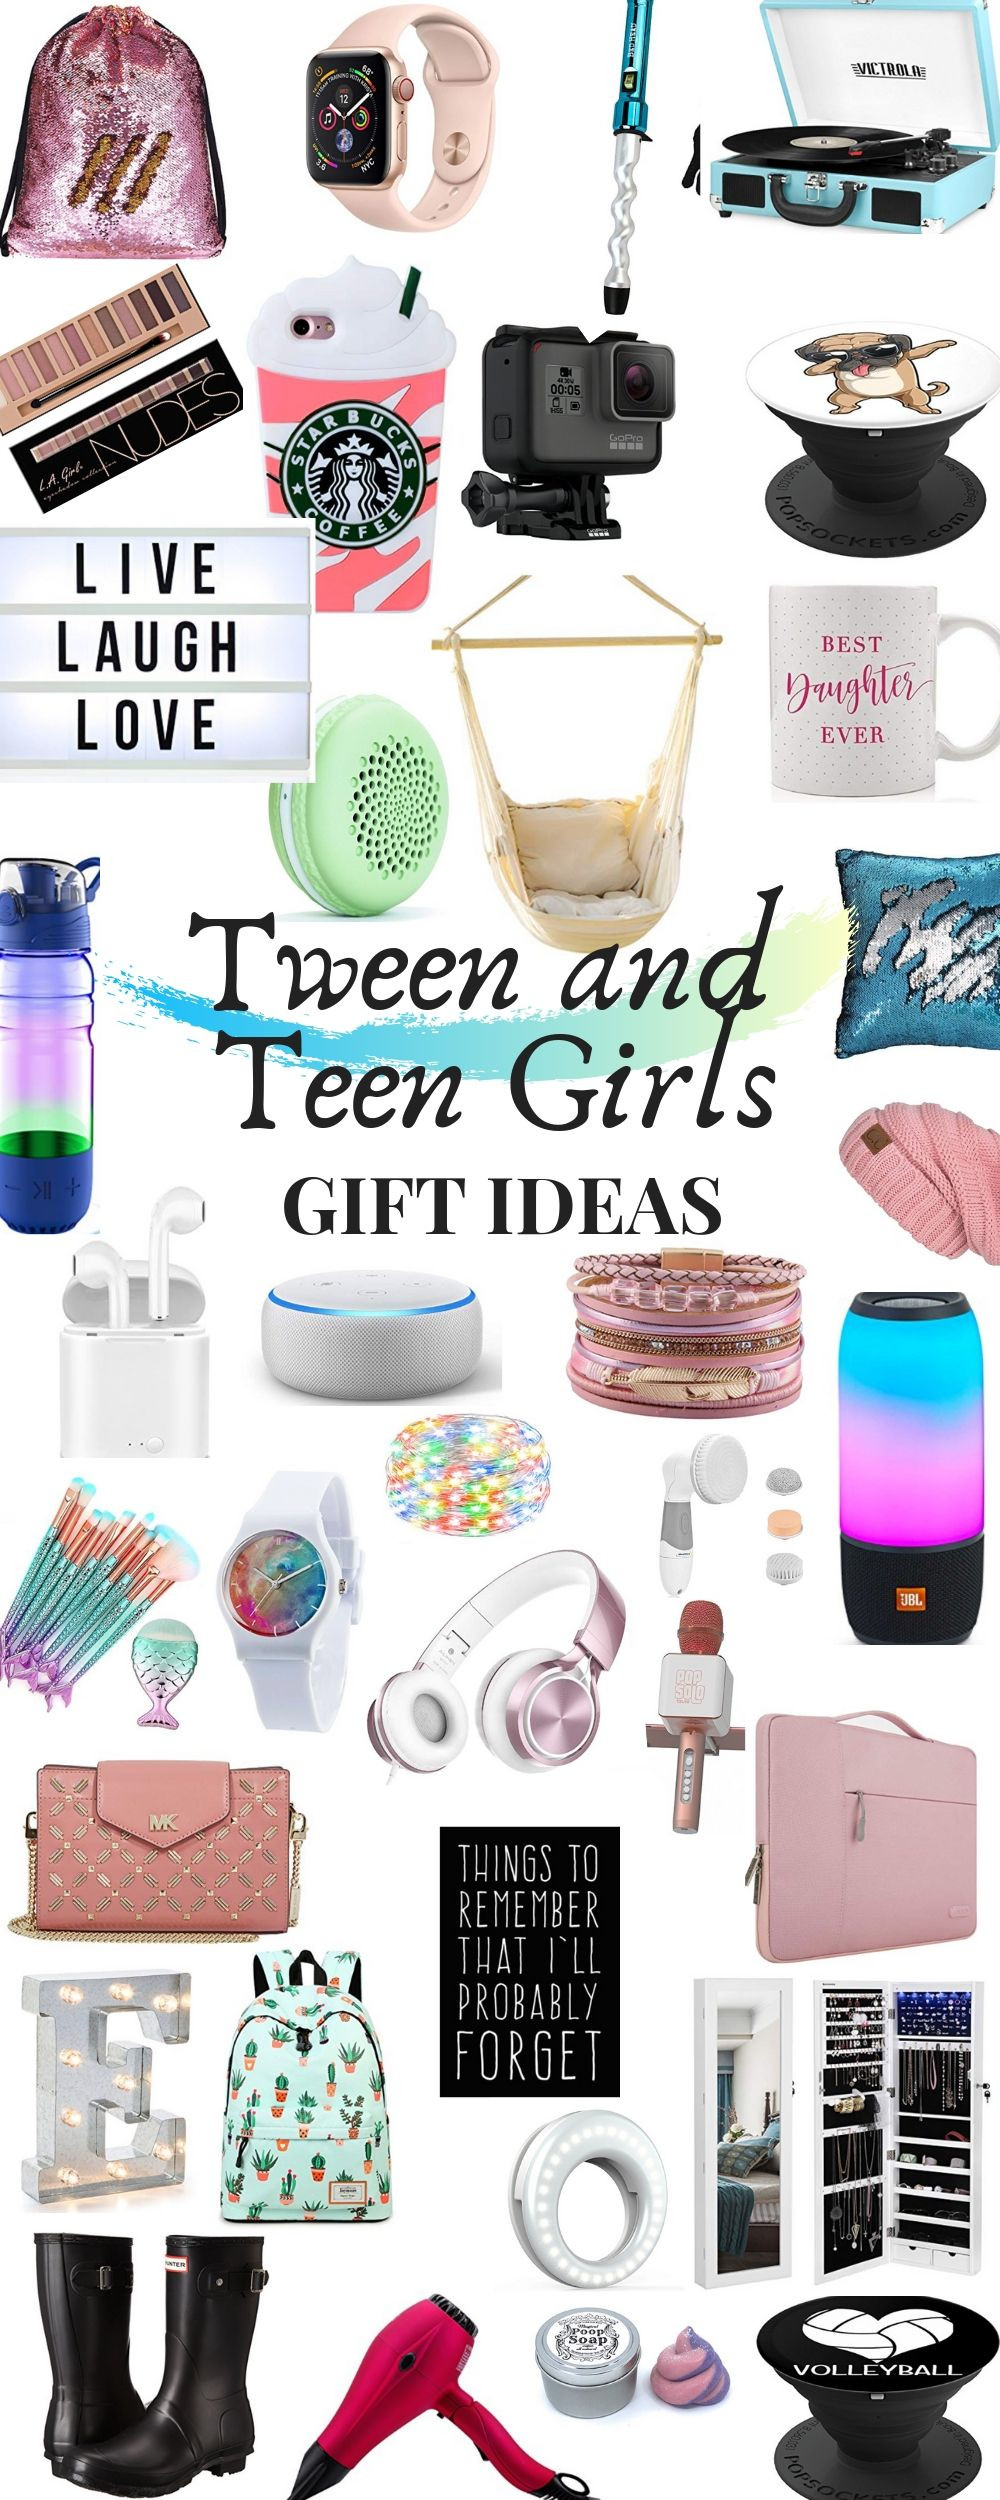 Christmas Gift Ideas 2020 For Teen Girls
 Teenage Girl and Tween Girl Gift Guide 2019